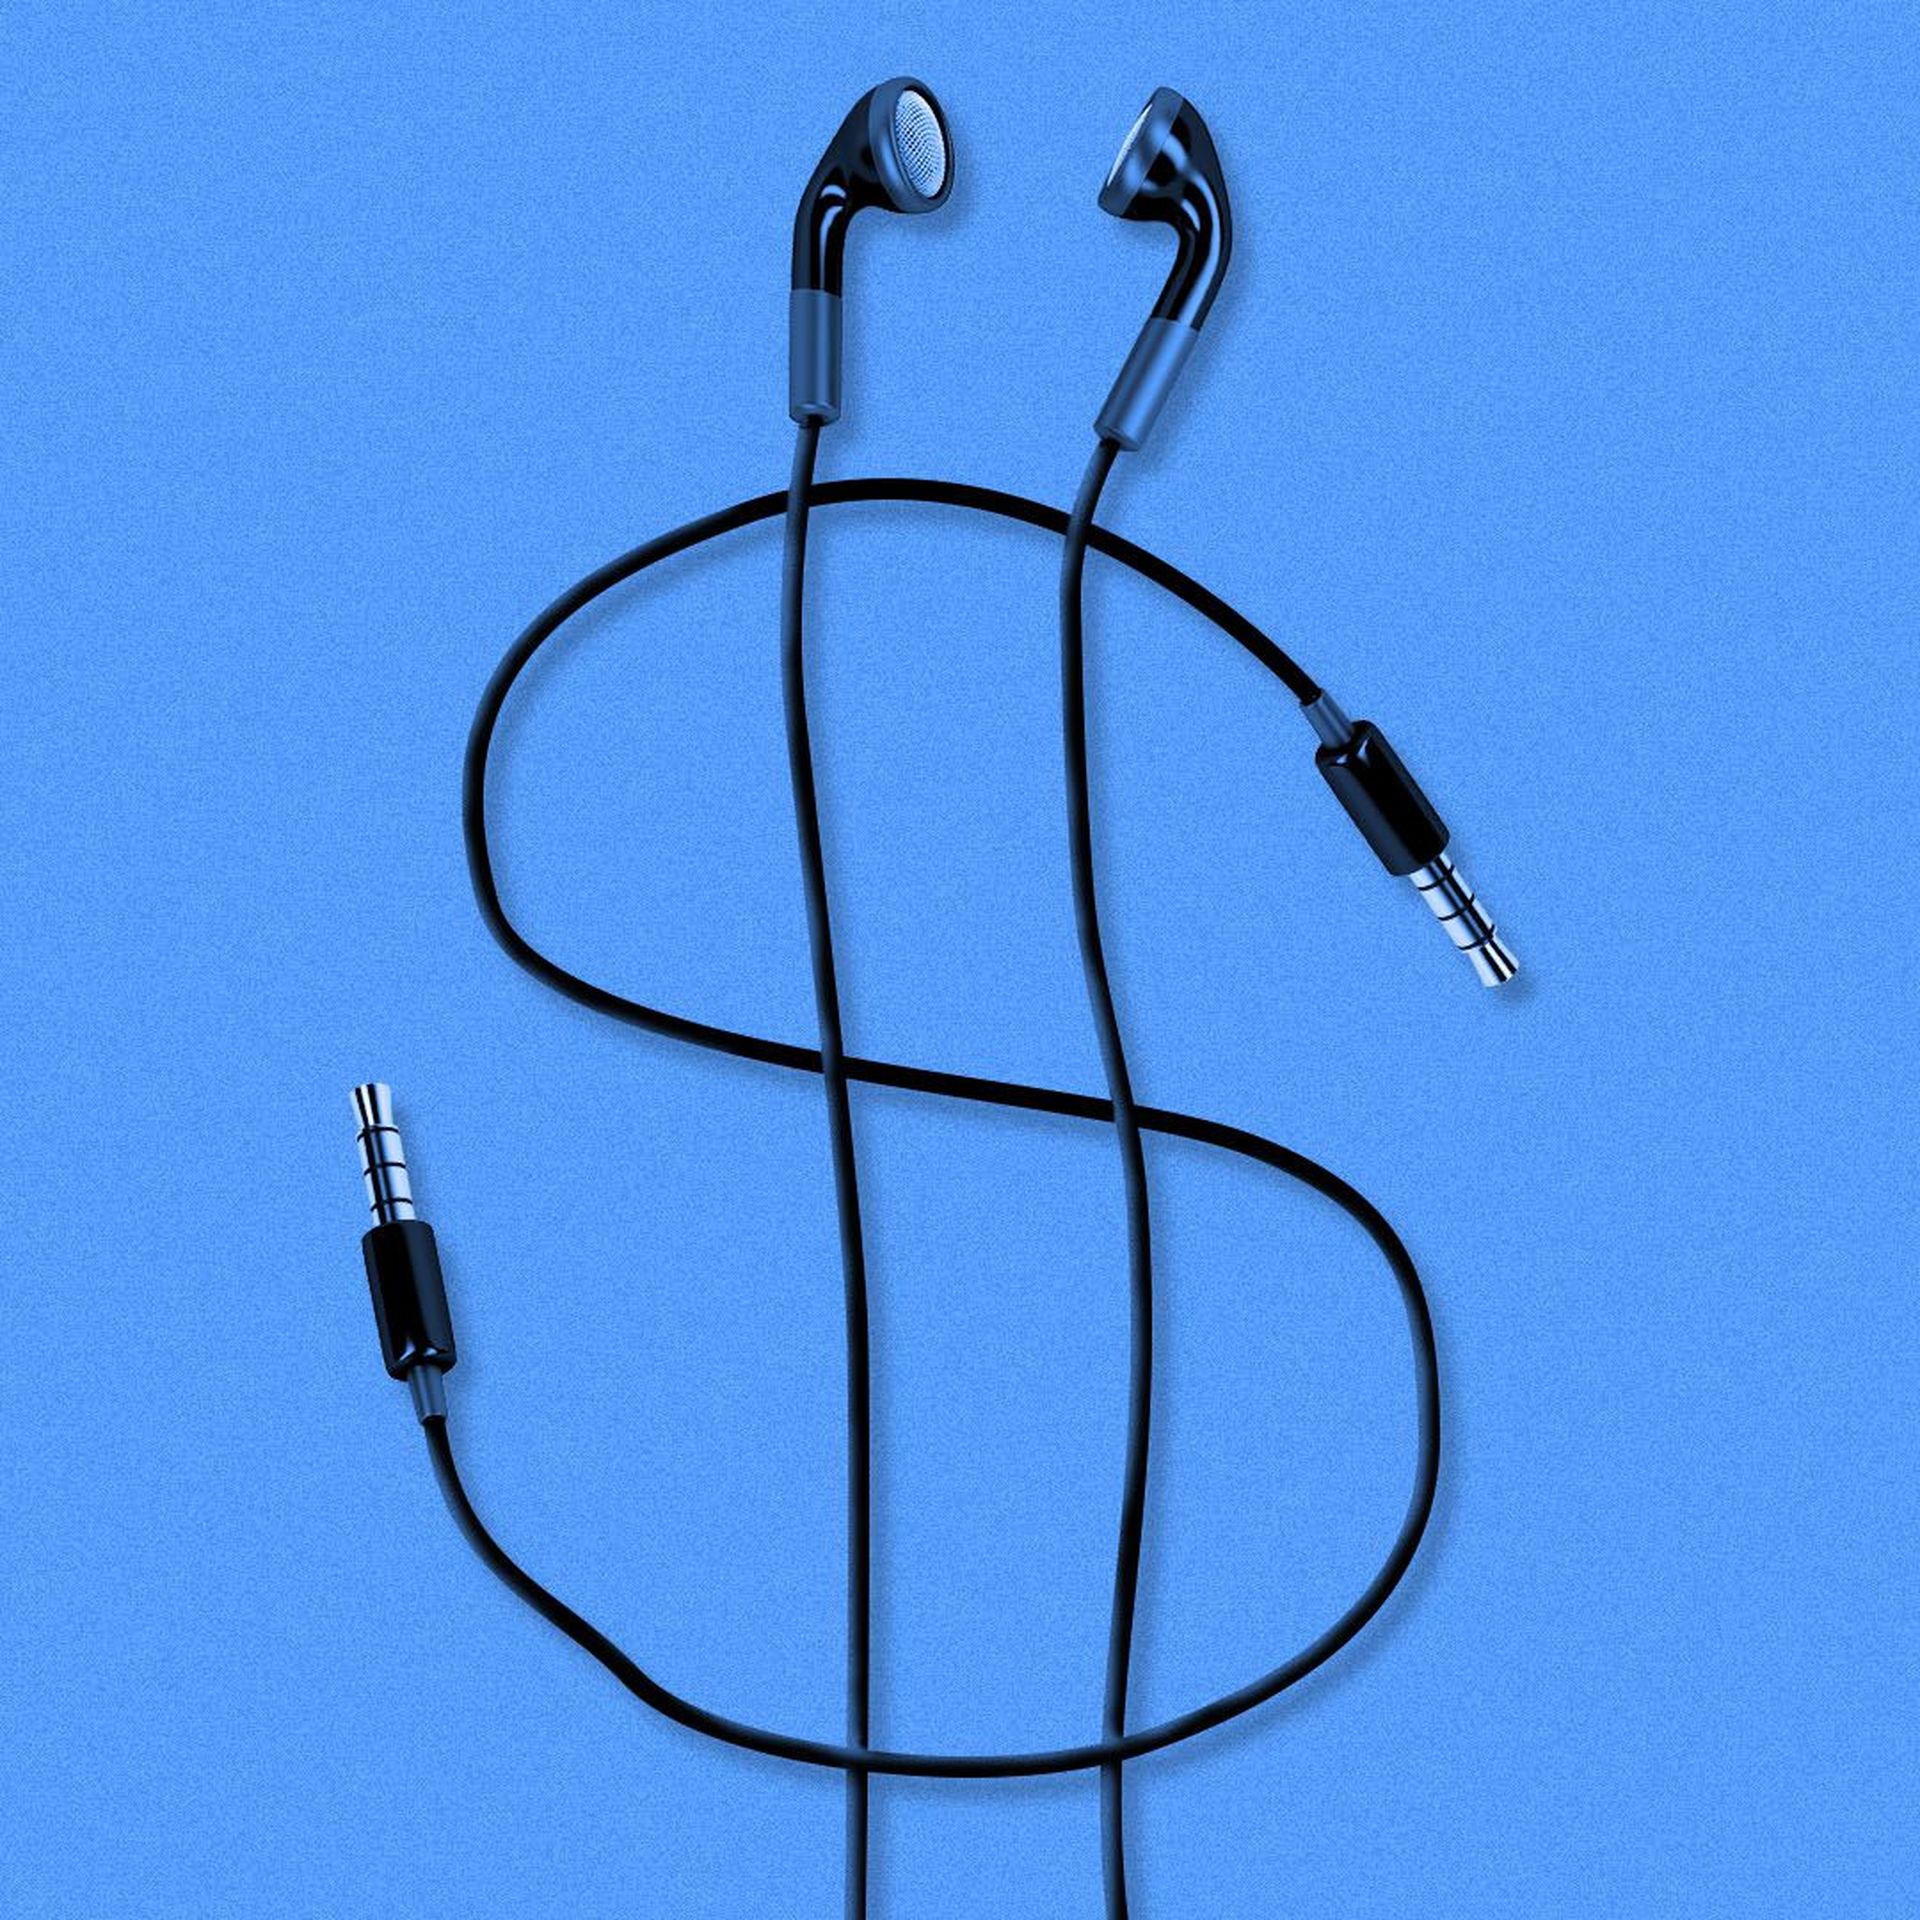 Illustration of headphones in the shape of money